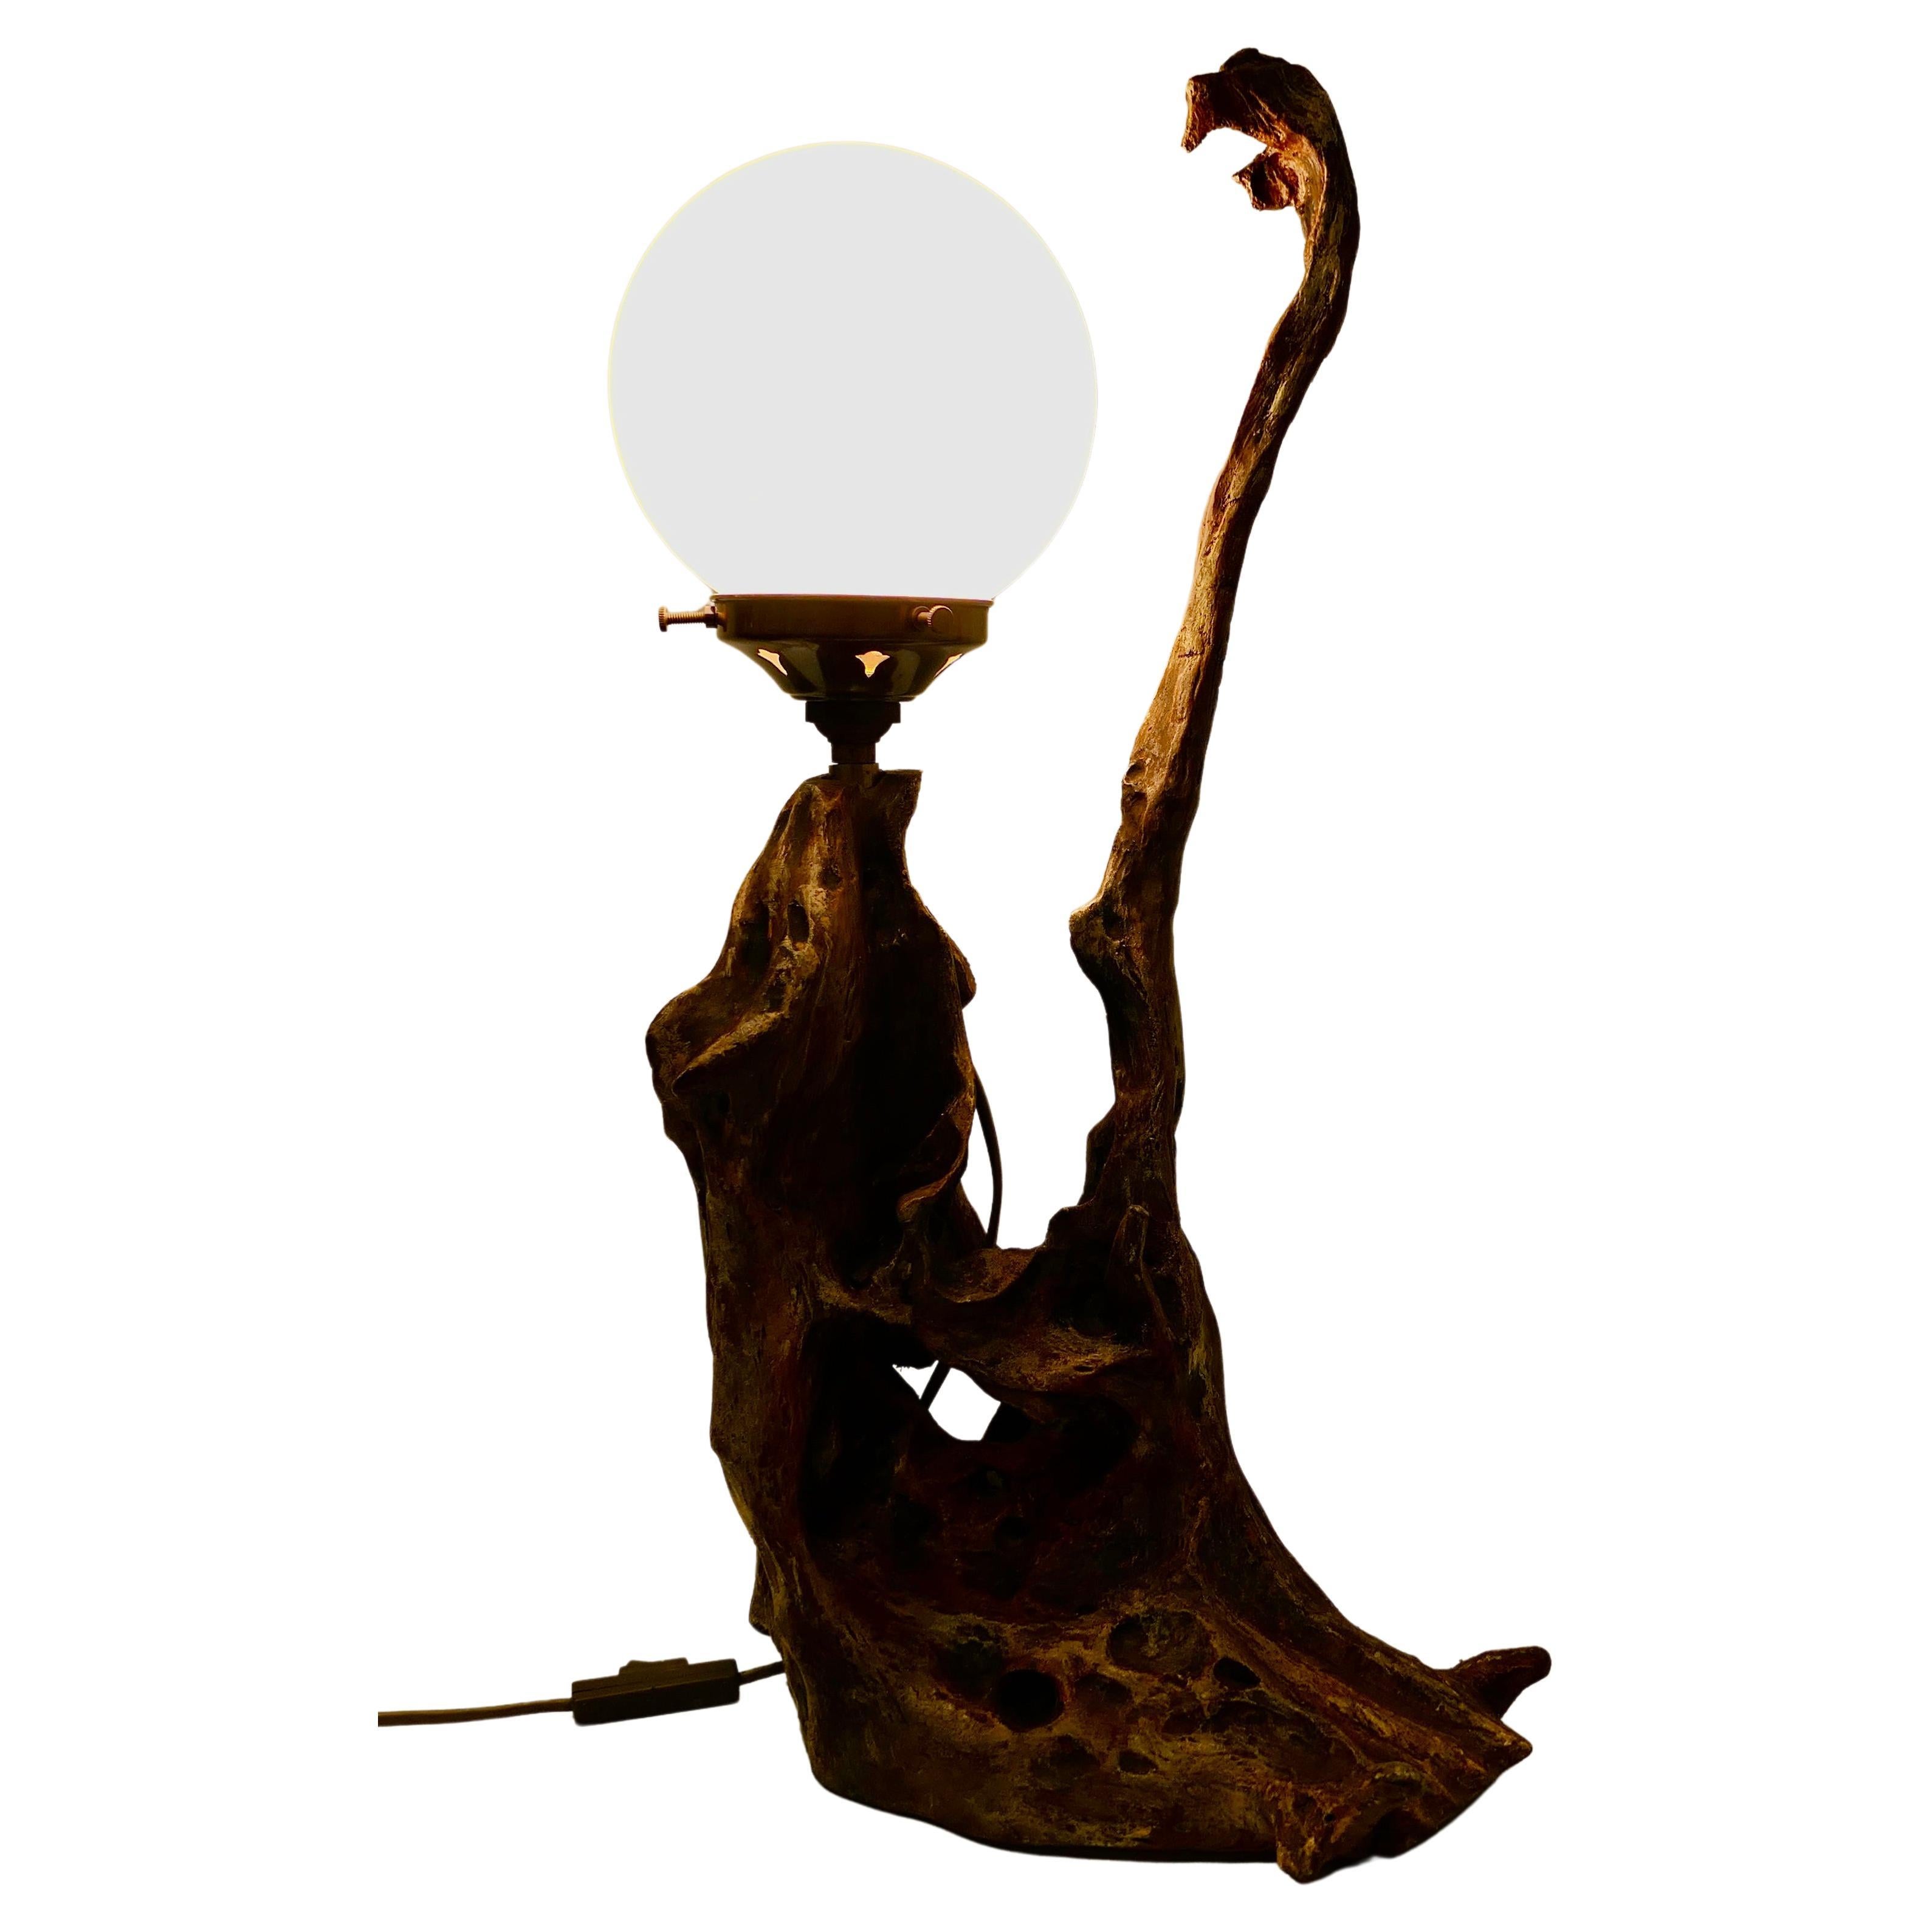 Volkskunst-Tischlampe mit geschnitzter Wurzel